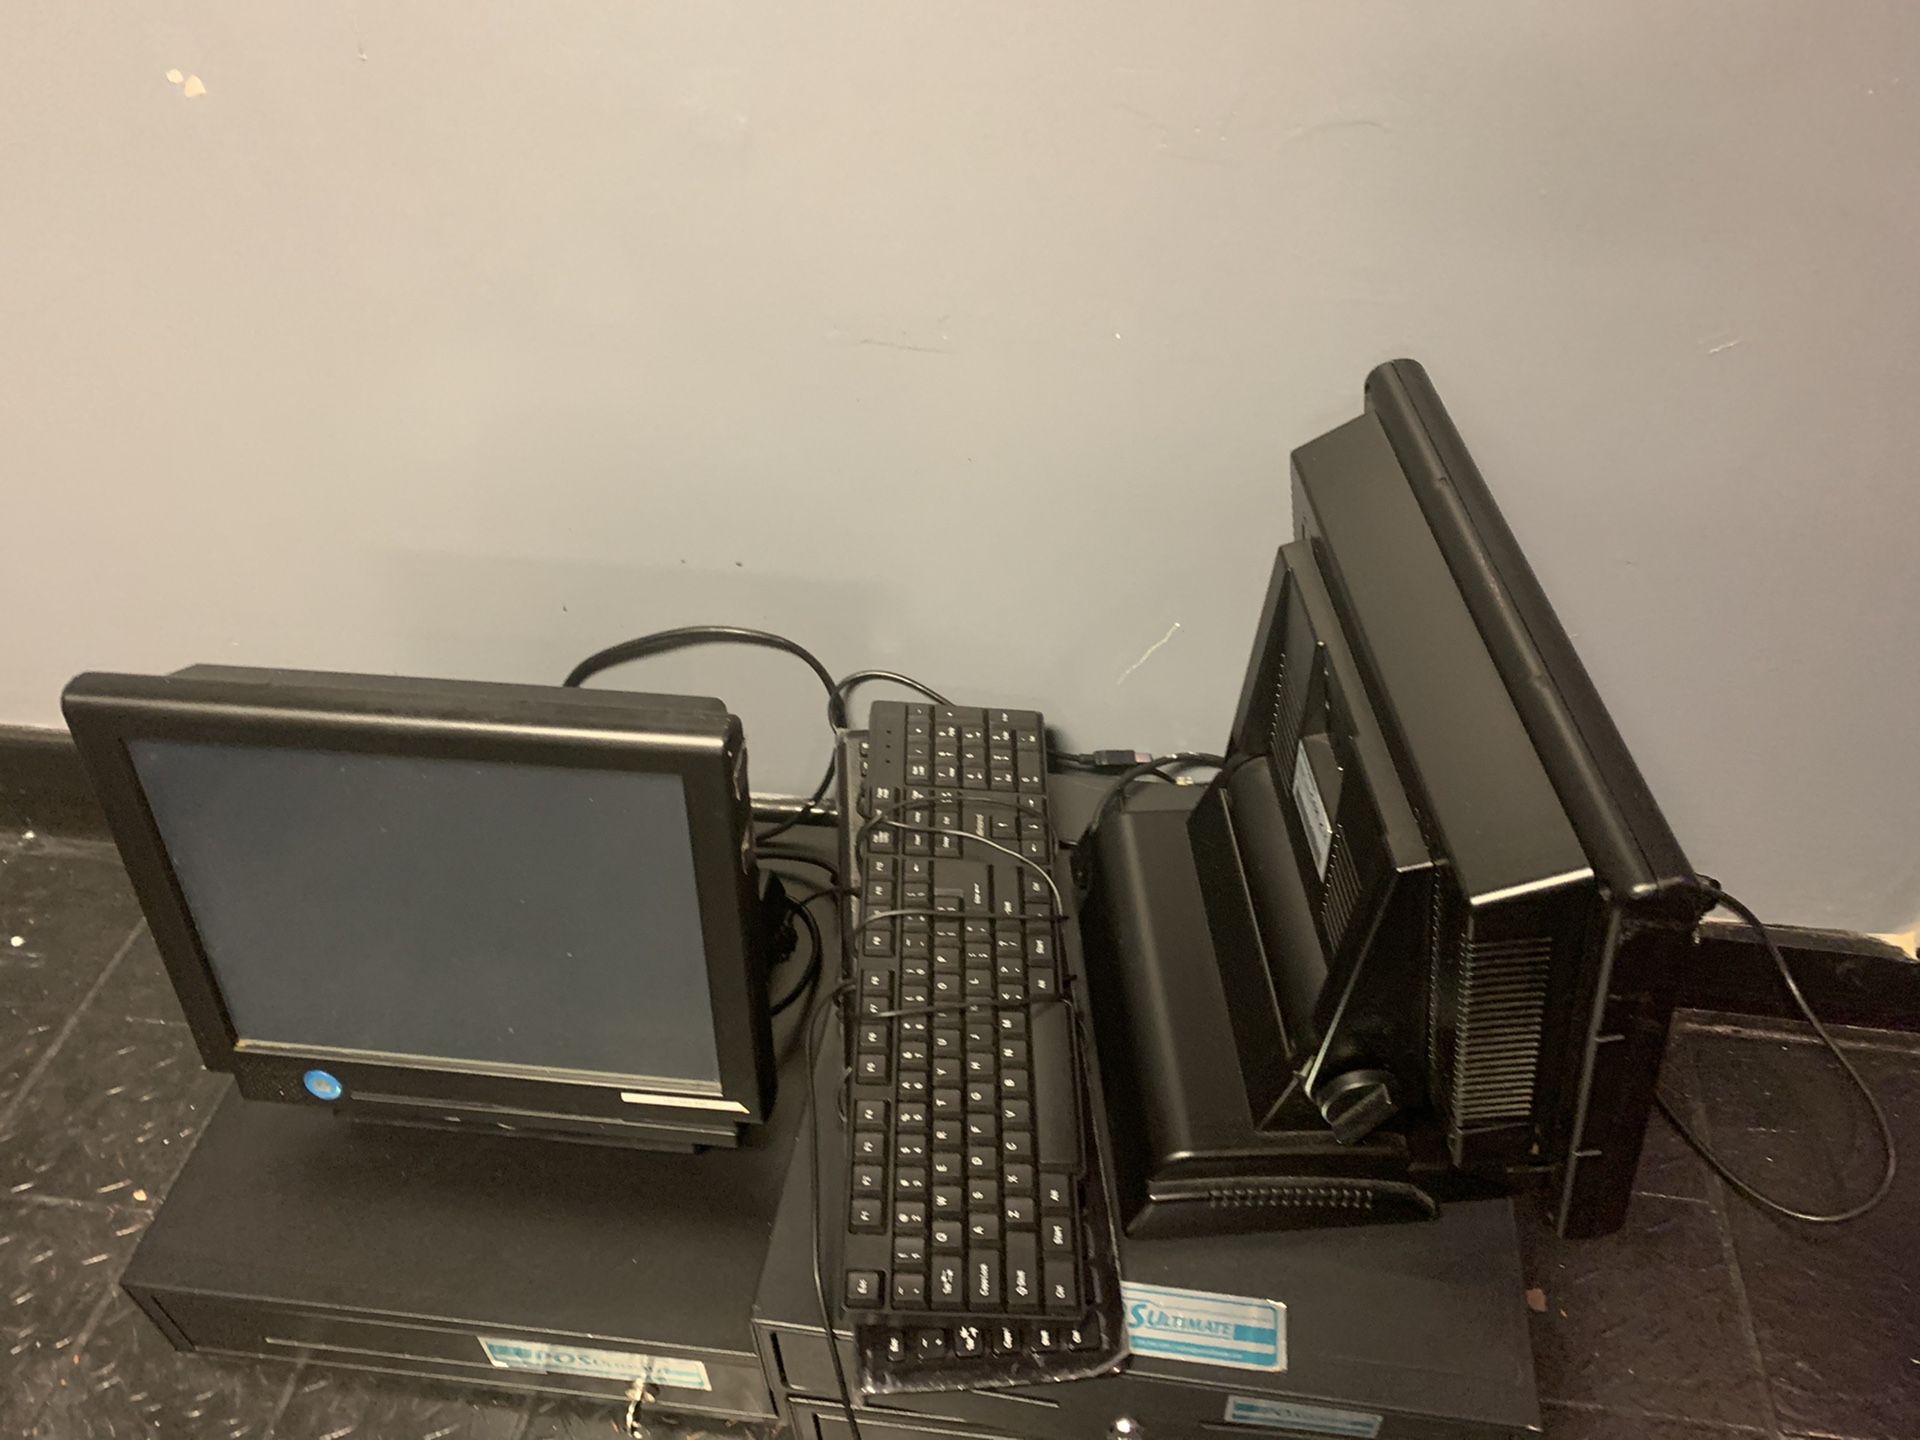 Complete POS computers, printers, keyboard, cash drawer